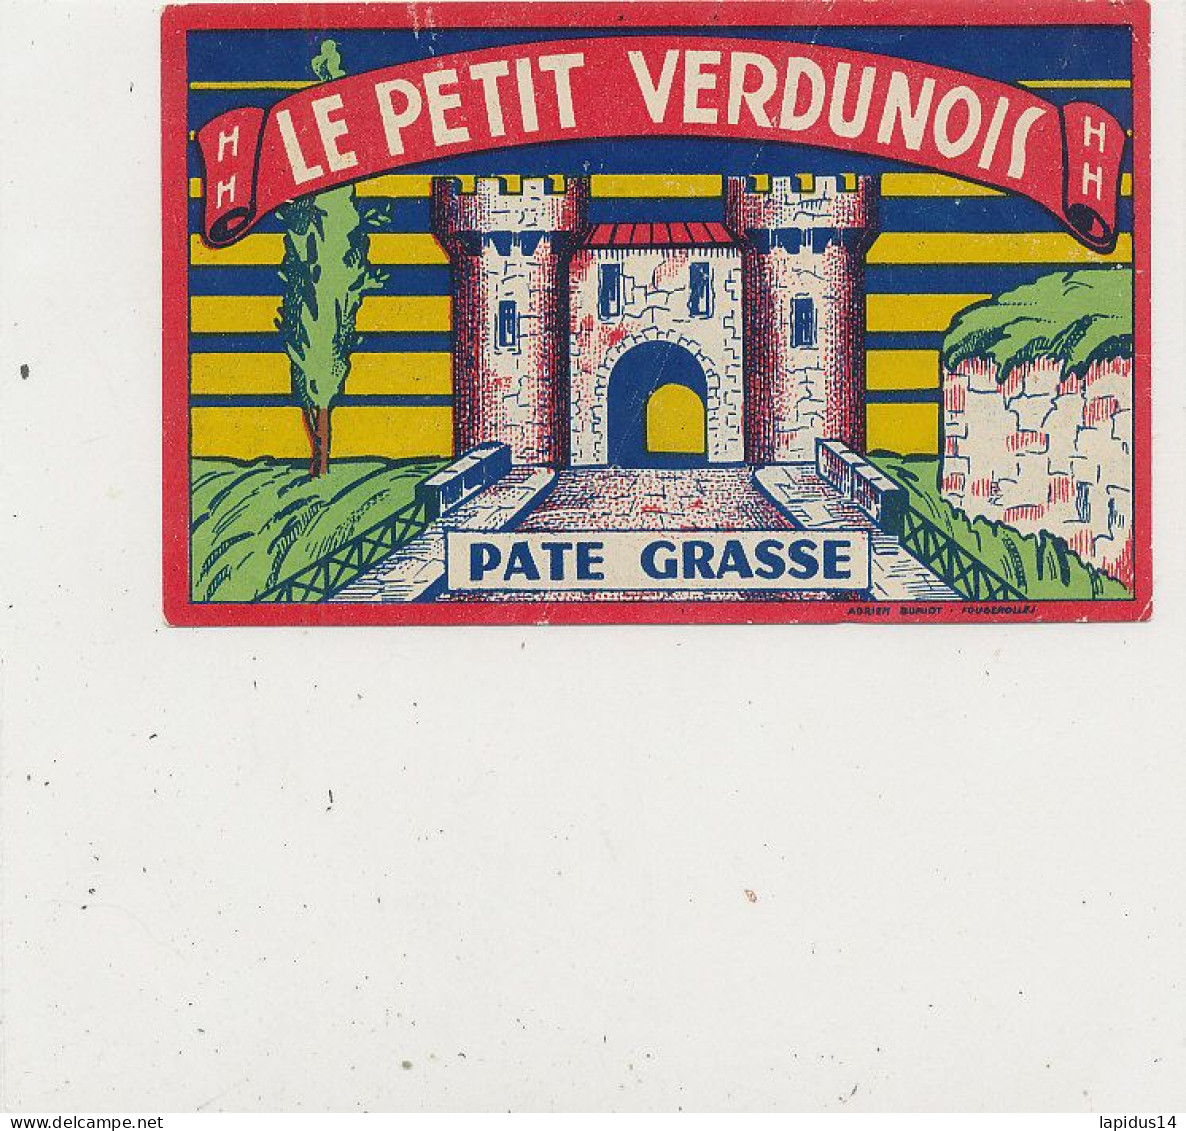 GG 444  / ETIQUETTE FROMAGE  PATE GRASSE  LE PETIT VERDUNOIS - Cheese